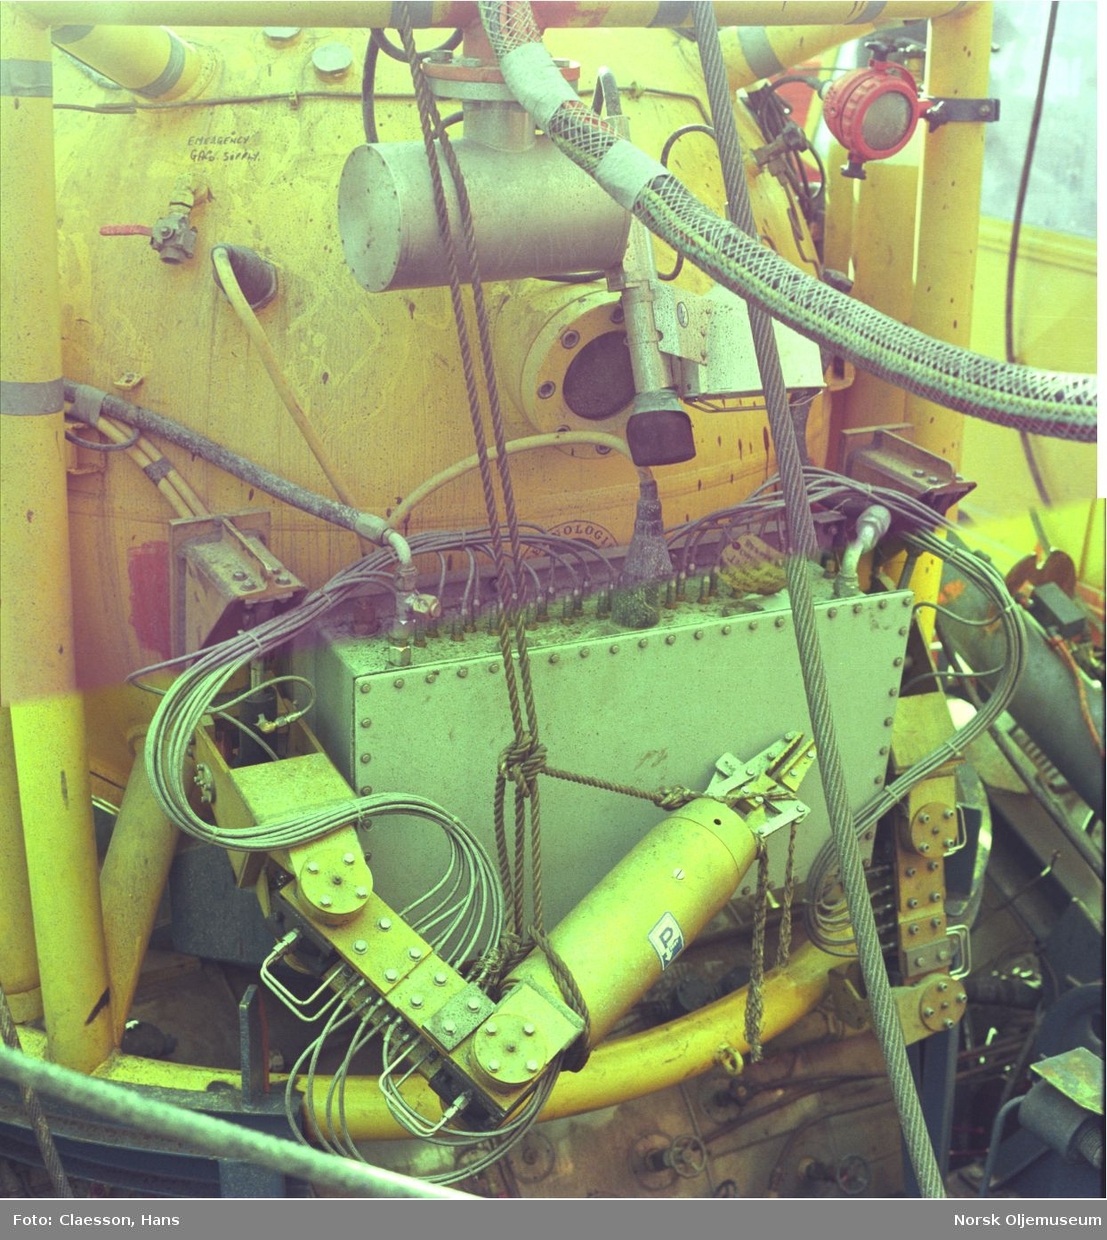 Three-X Drass 1 500 ft Saturation Diving system, Manipulator Arms.
Manipulatorene ble produsert av Perry Submarines i Florida, USA.